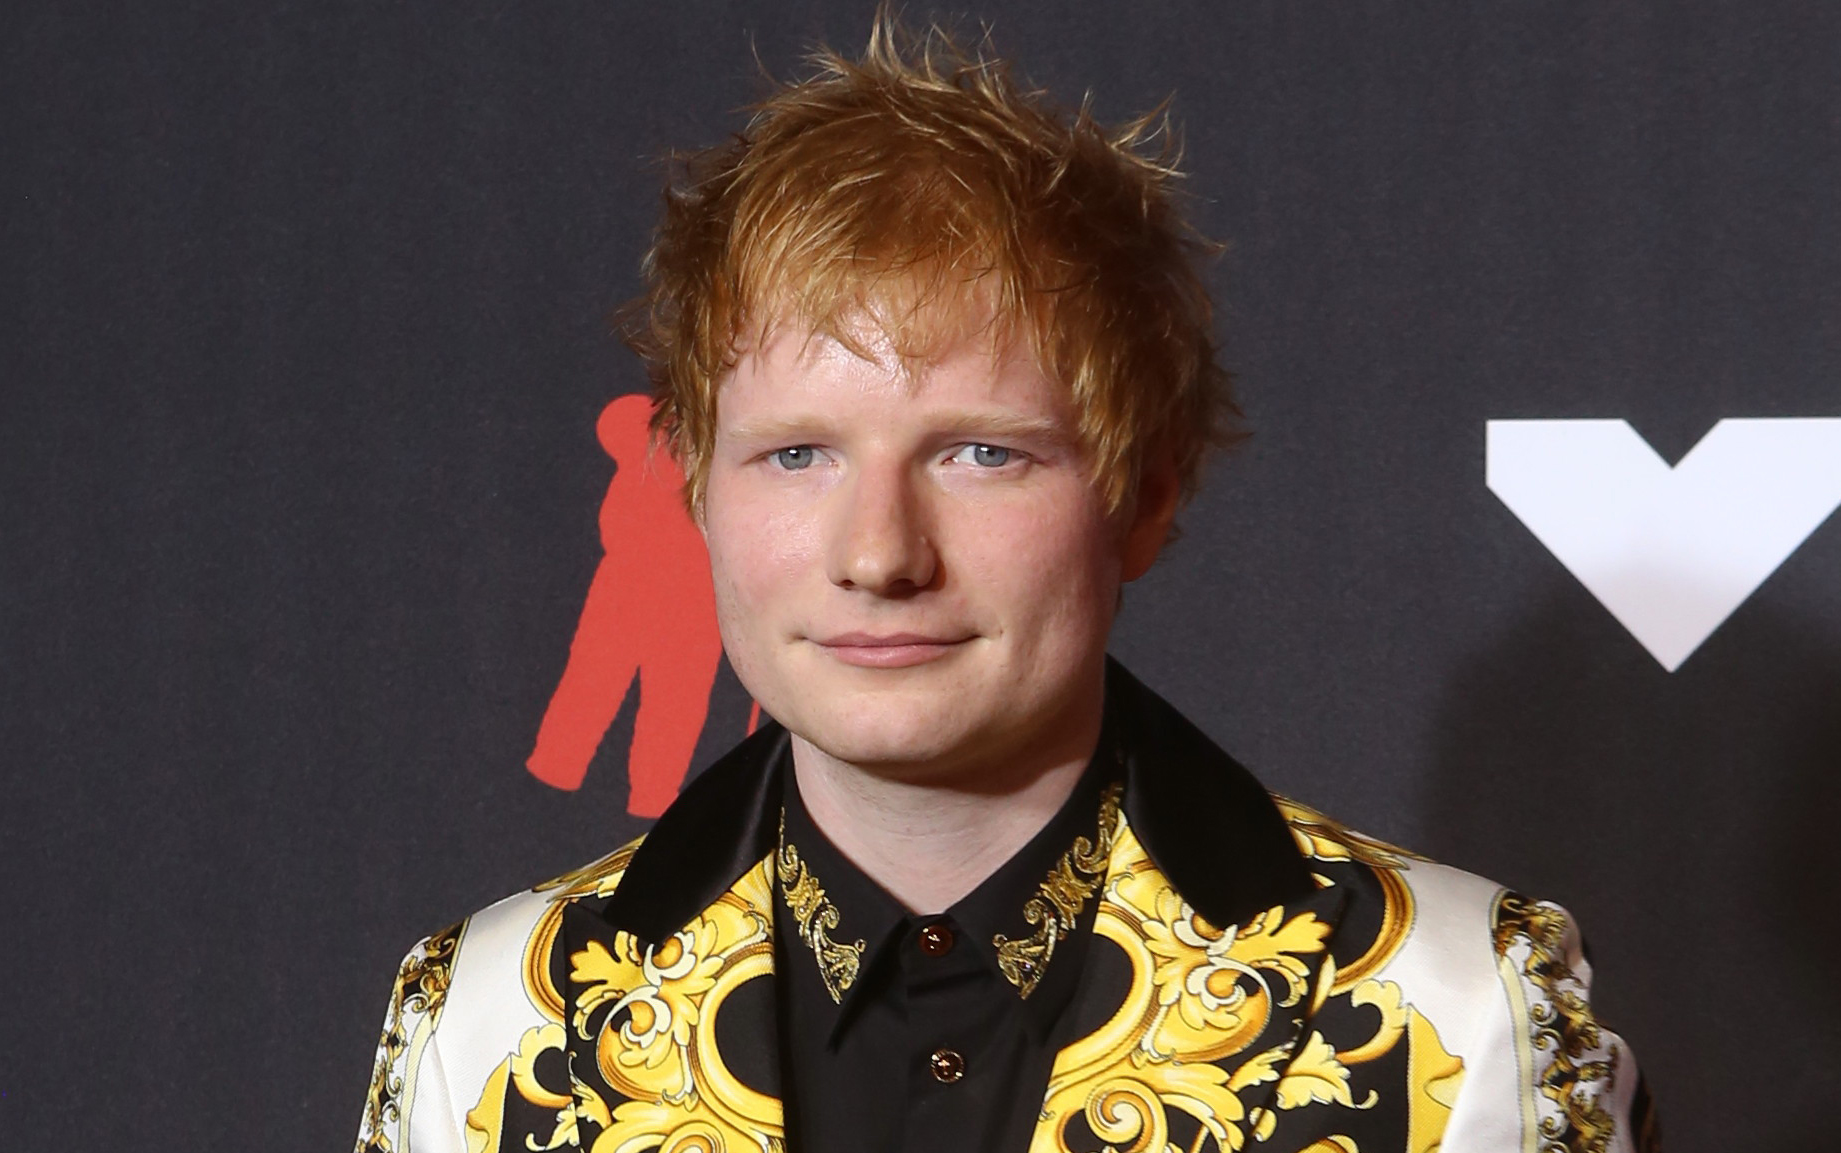 Grammy Award winning singer-songwriter Ed Sheeran is performing at Stephen Talkhouse this August.